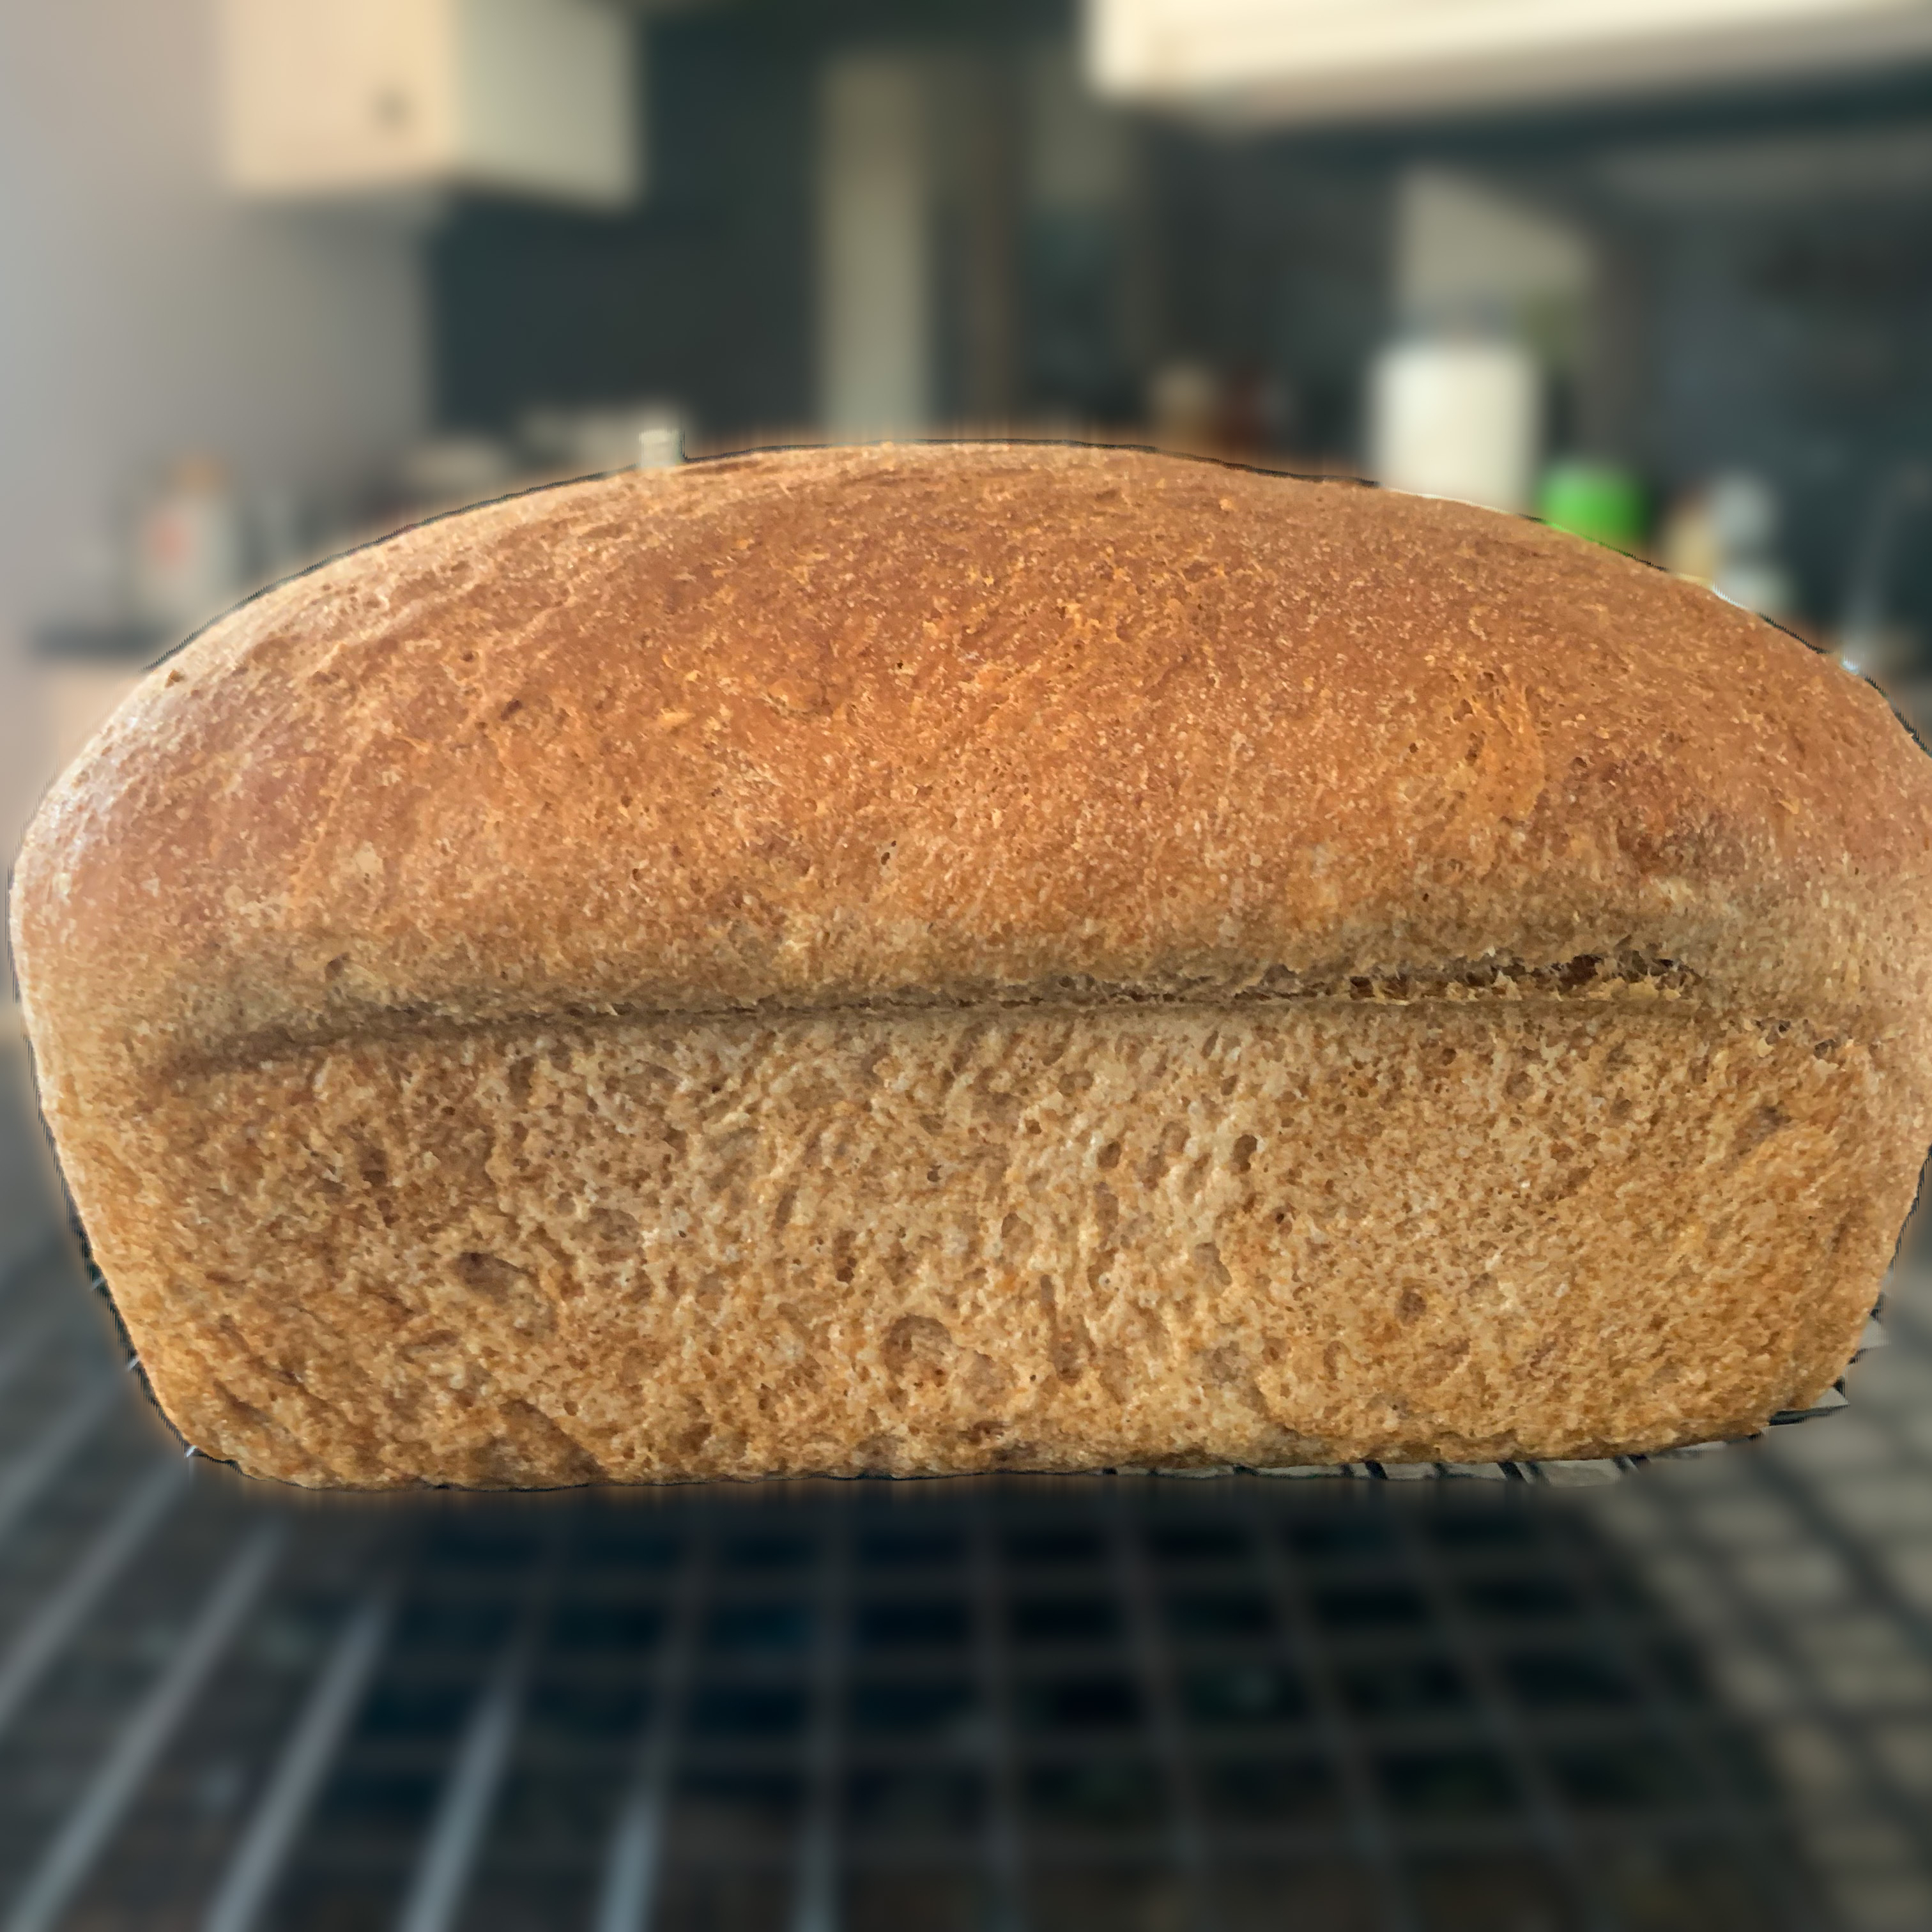 Easy 100% Whole Wheat Bread 